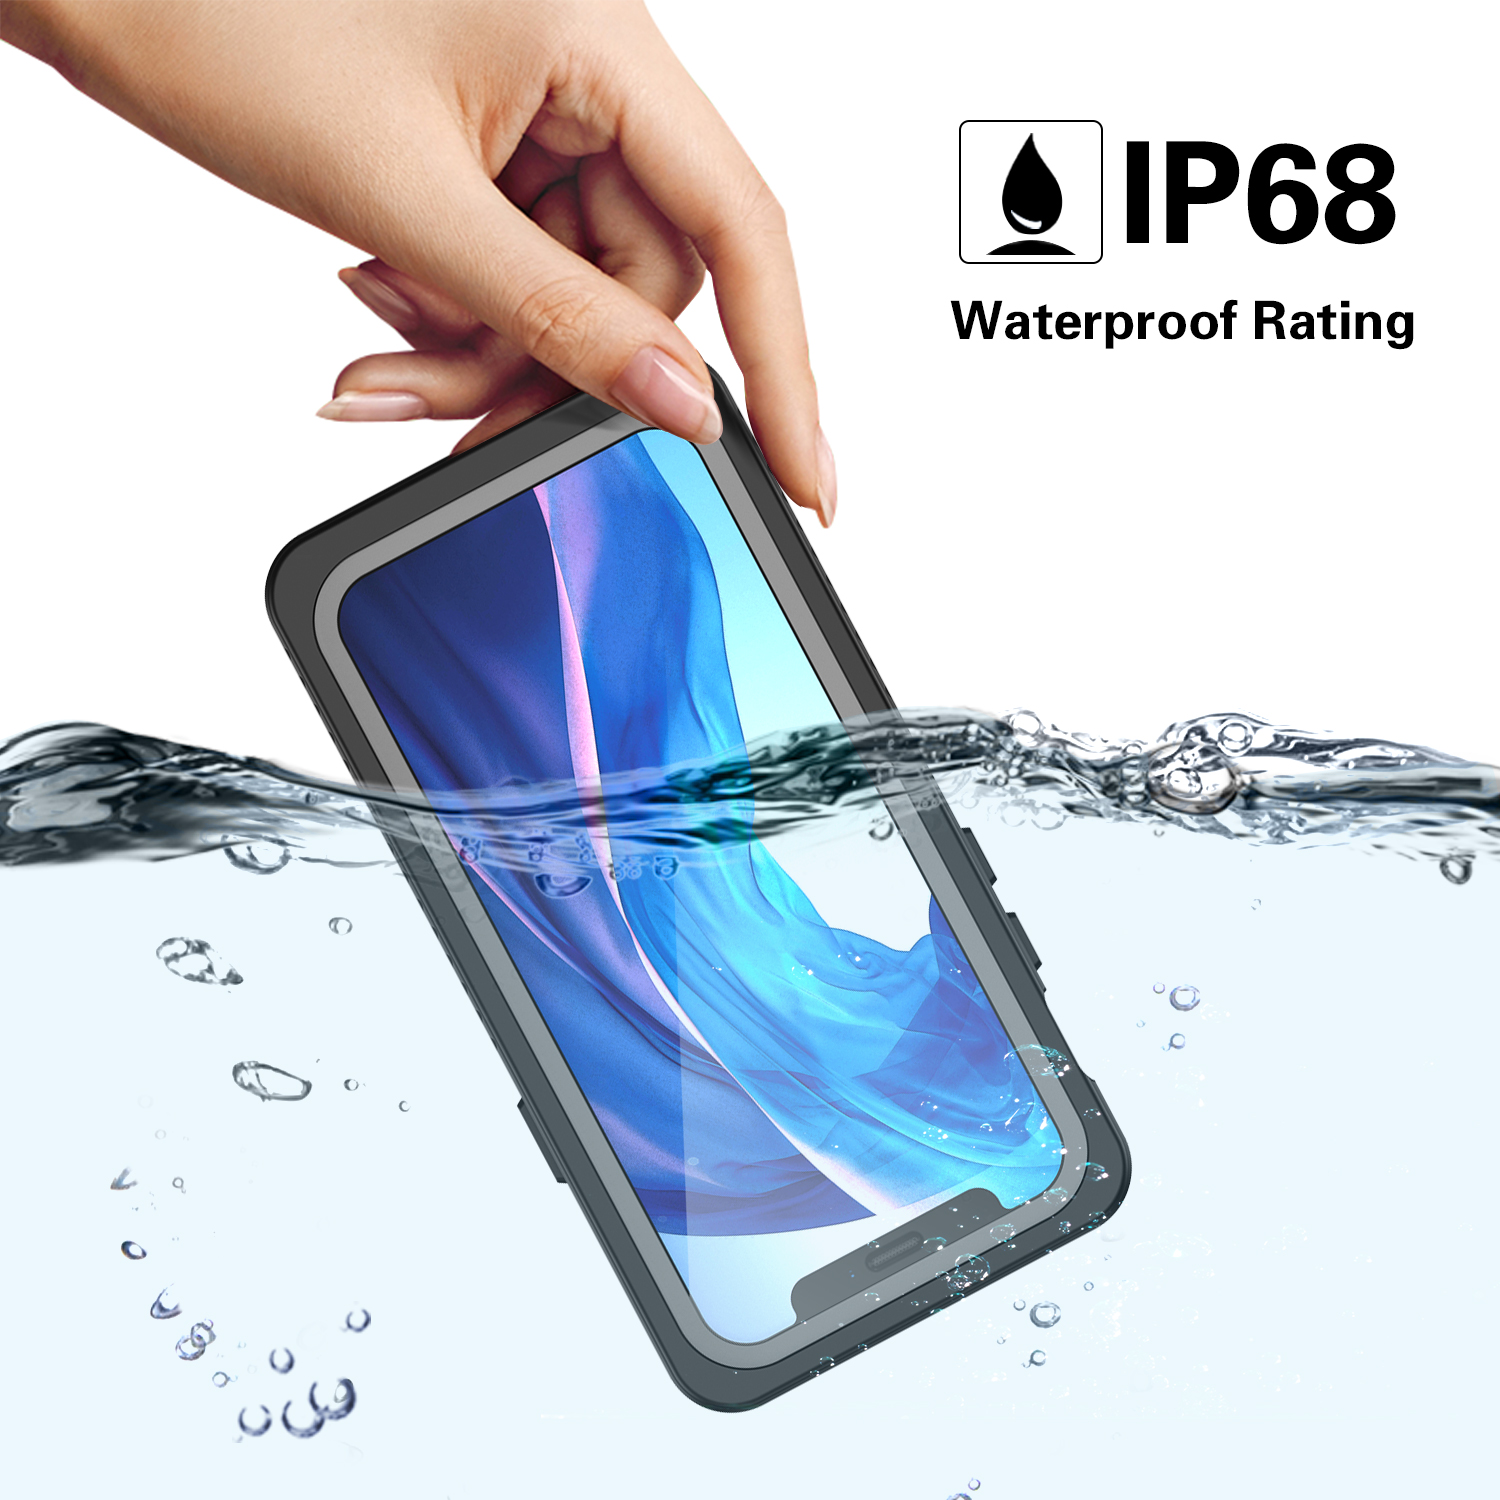 Waterproof IP68 Snowproof Shockproof Heavy Duty Case with Built In Screen Protector for Apple iPHONE